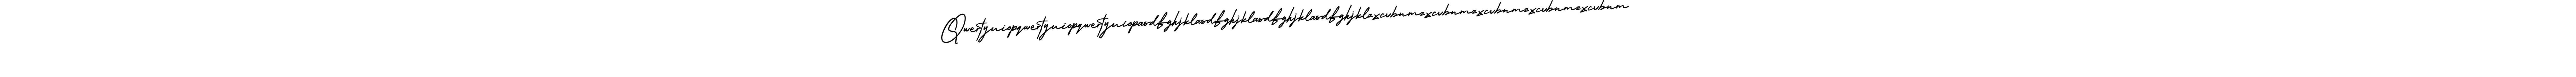 Qwertyuiopqwertyuiopqwertyuiopasdfghjklasdfghjklasdfghjklasdfghjklzxcvbnmzxcvbnmzxcvbnmzxcvbnmzxcvbnm stylish signature style. Best Handwritten Sign (AmerikaSignatureDemo-Regular) for my name. Handwritten Signature Collection Ideas for my name Qwertyuiopqwertyuiopqwertyuiopasdfghjklasdfghjklasdfghjklasdfghjklzxcvbnmzxcvbnmzxcvbnmzxcvbnmzxcvbnm. Qwertyuiopqwertyuiopqwertyuiopasdfghjklasdfghjklasdfghjklasdfghjklzxcvbnmzxcvbnmzxcvbnmzxcvbnmzxcvbnm signature style 3 images and pictures png